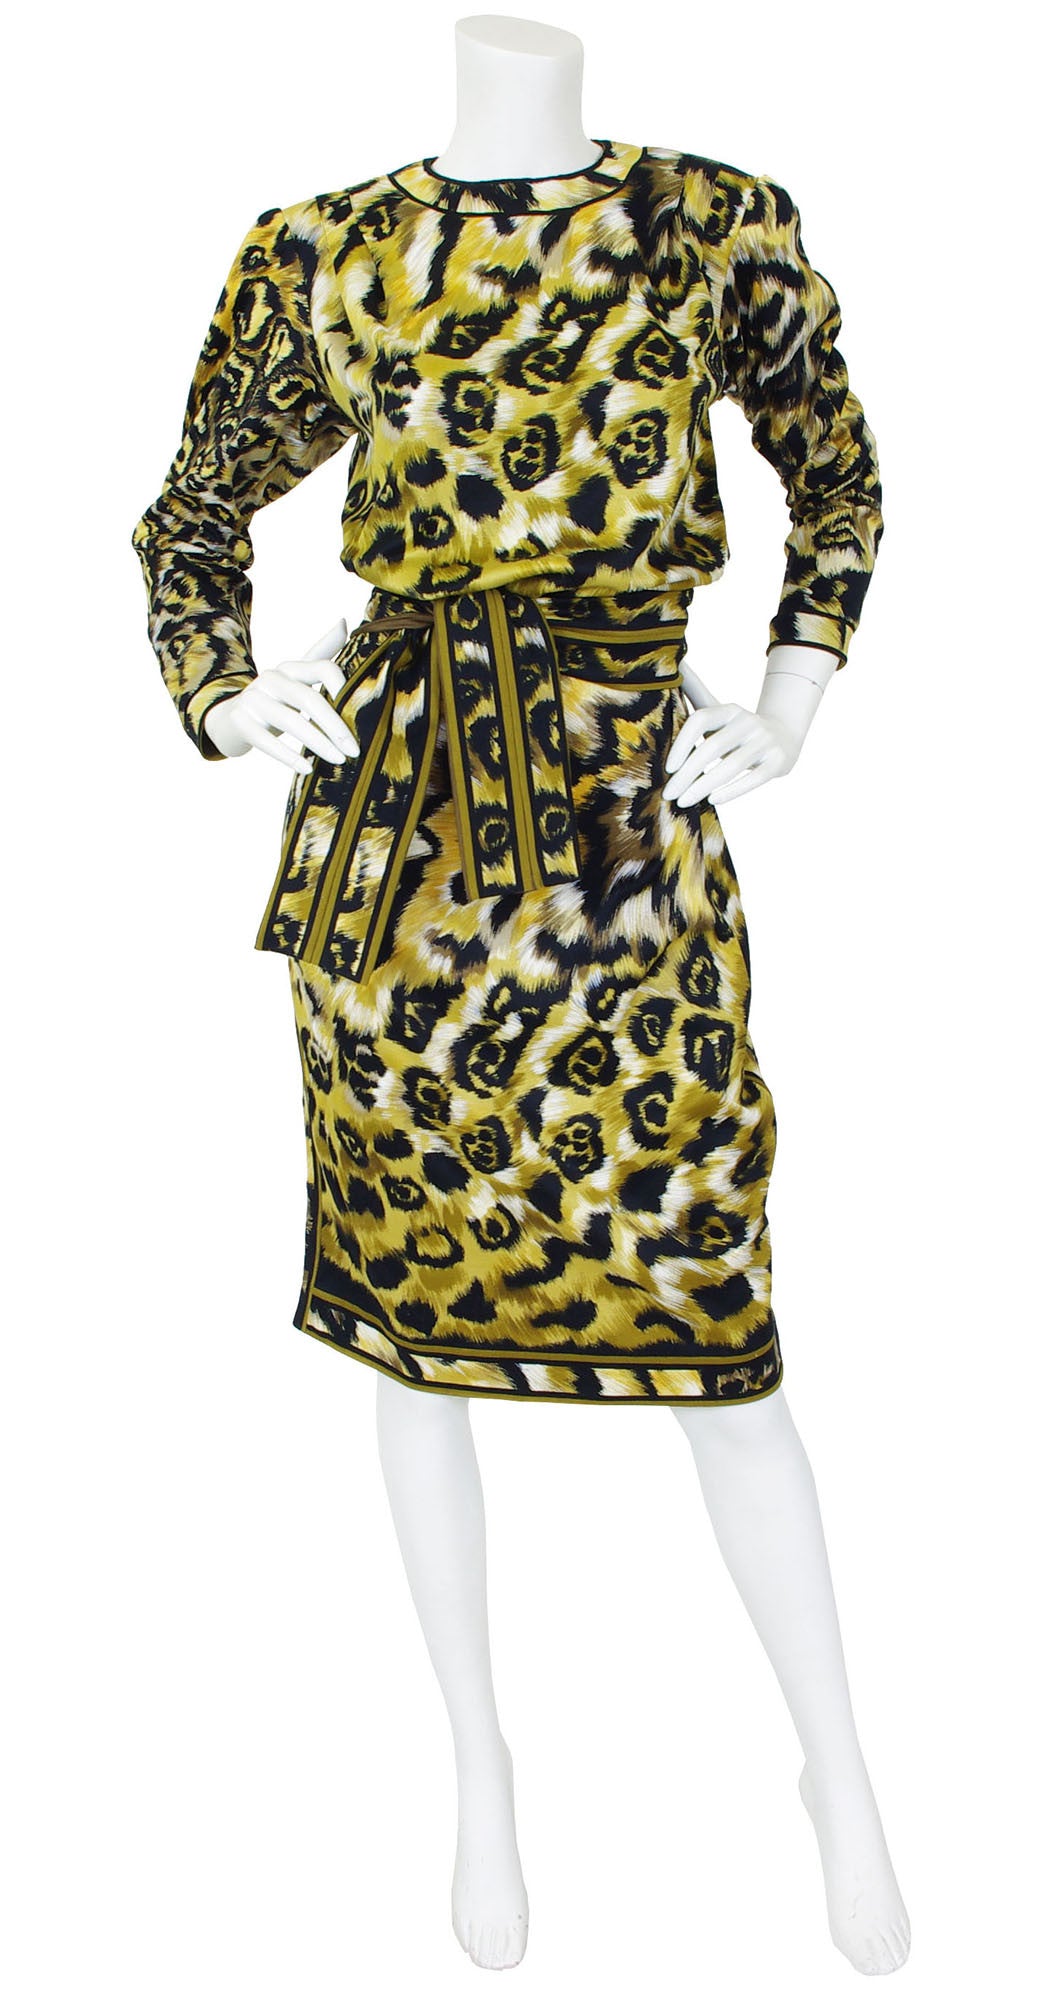 1980s Leopard Print Cotton Top & Skirt Set